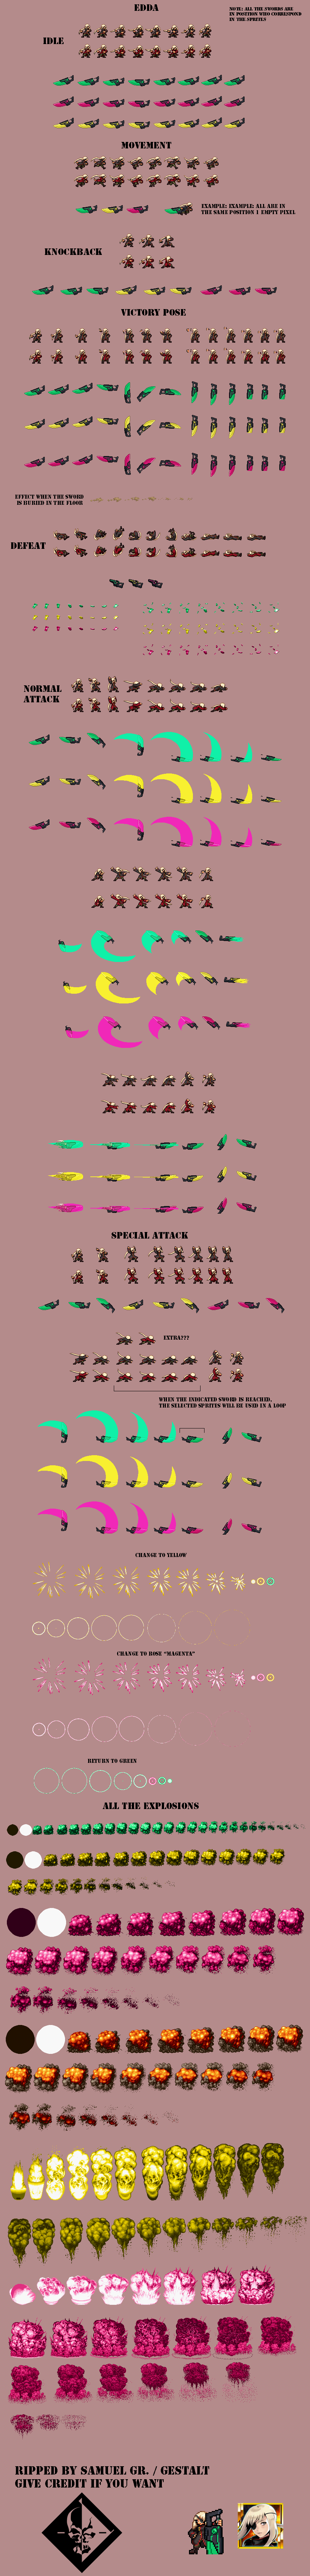 Metal Slug Attack - Edda / Special Edda